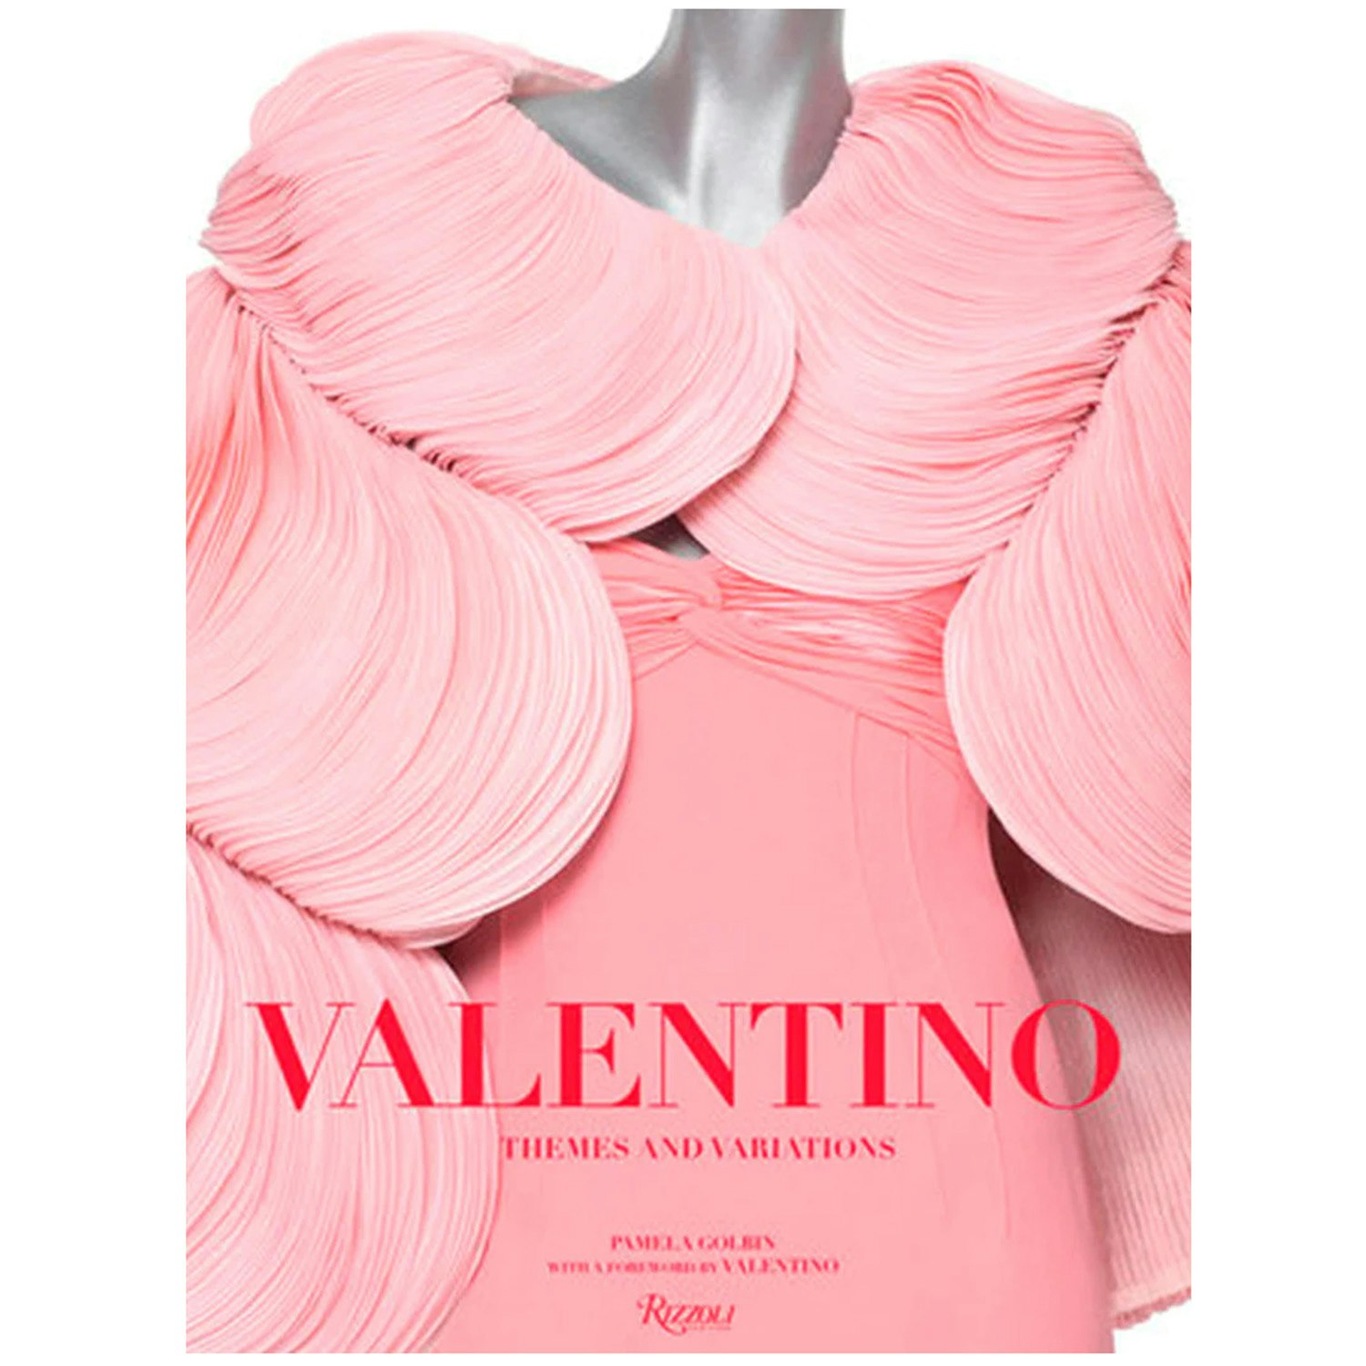 Valentino: Themes and Variations Boek